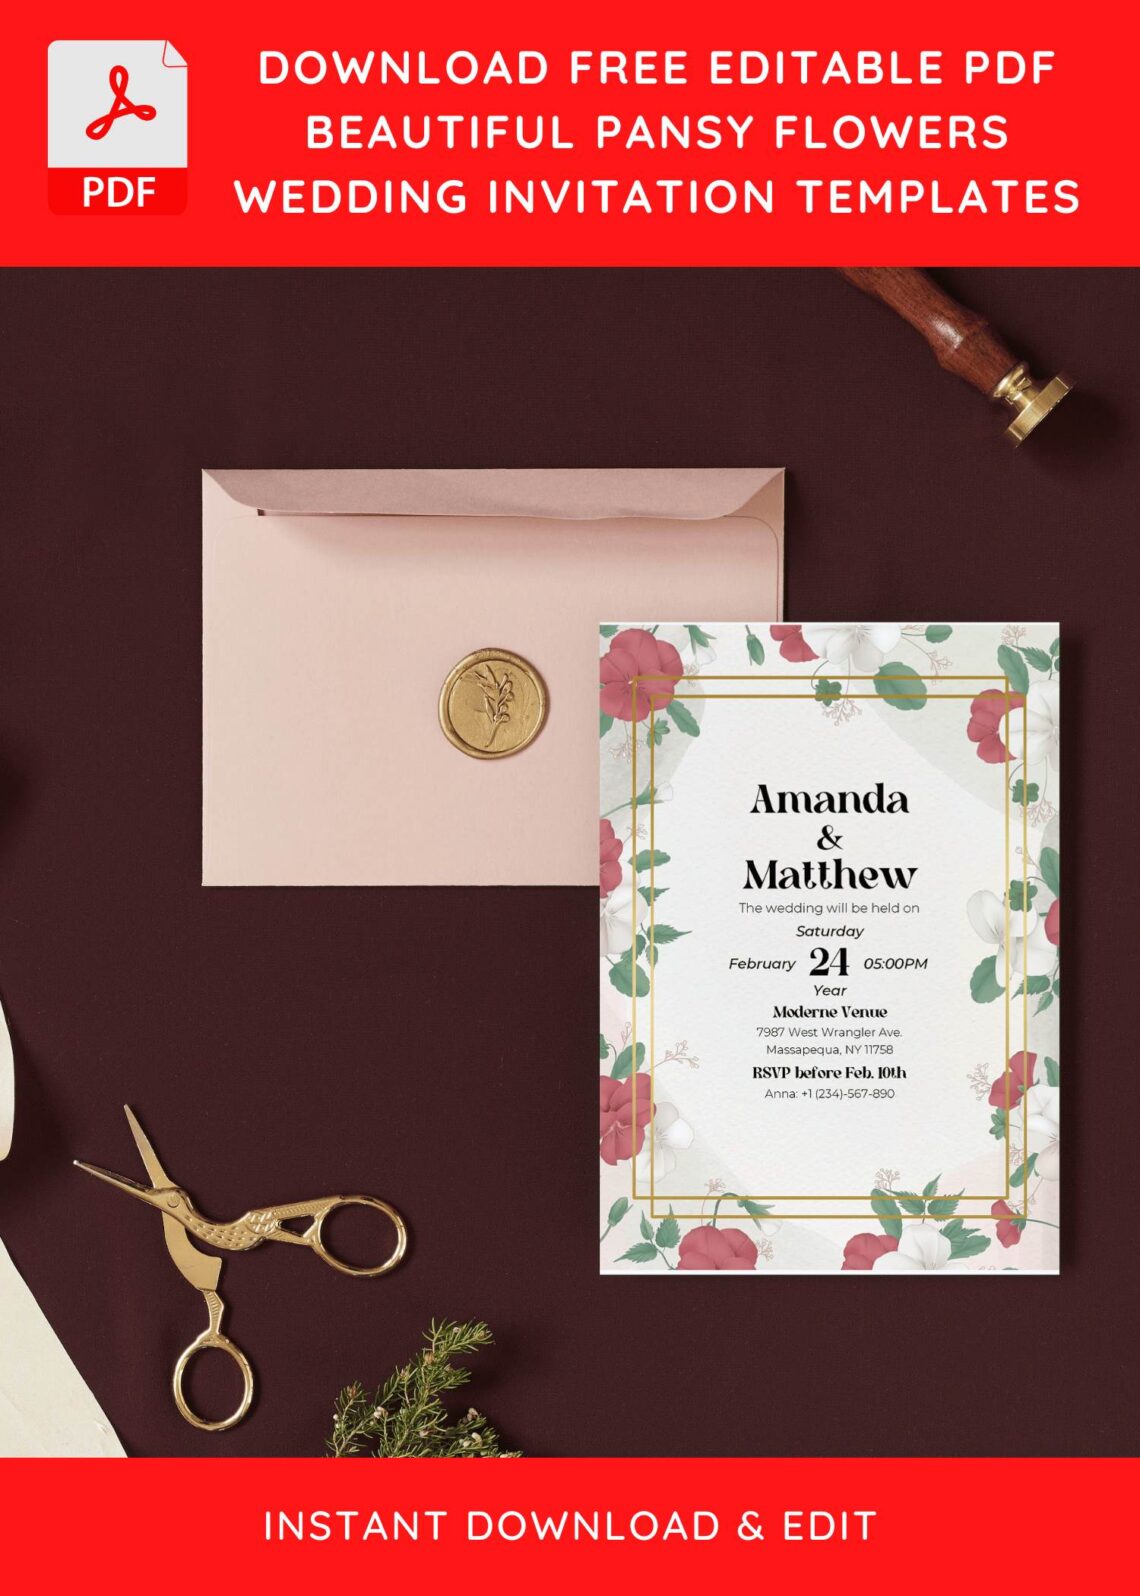 (Free Editable PDF) Enchanting Pansy Floral Wedding Invitation Templates I